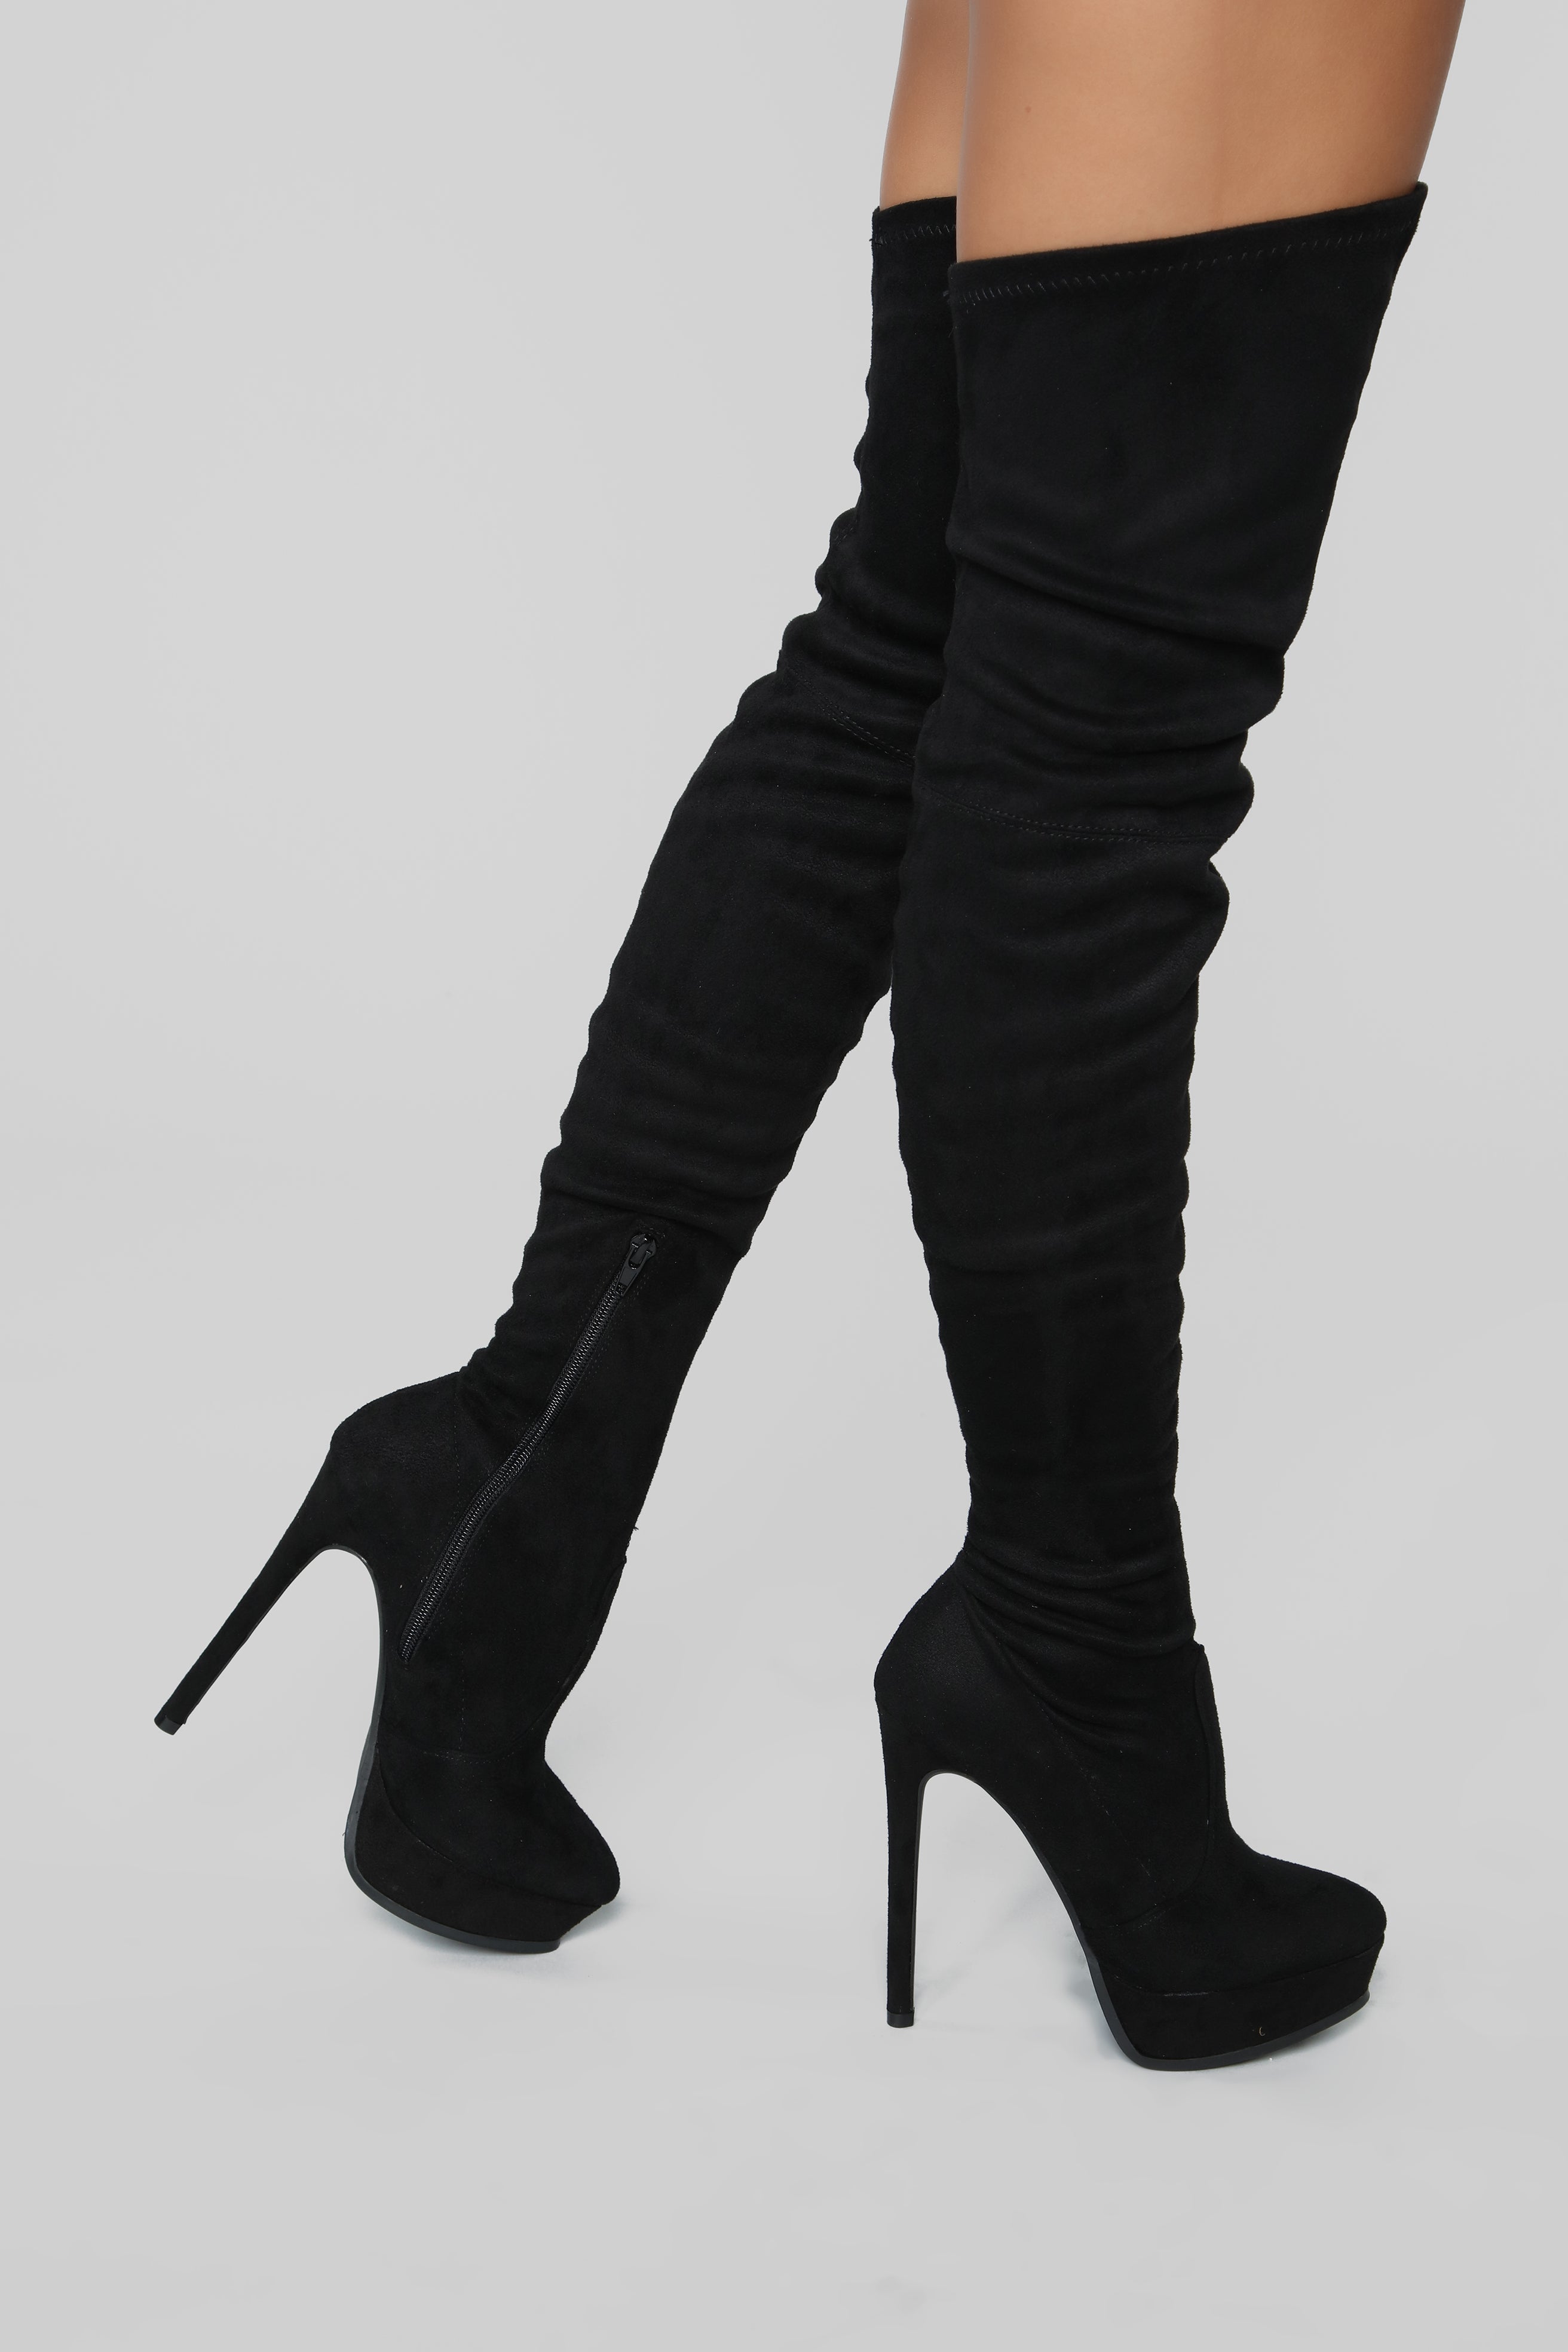 black thigh high boots fashion nova